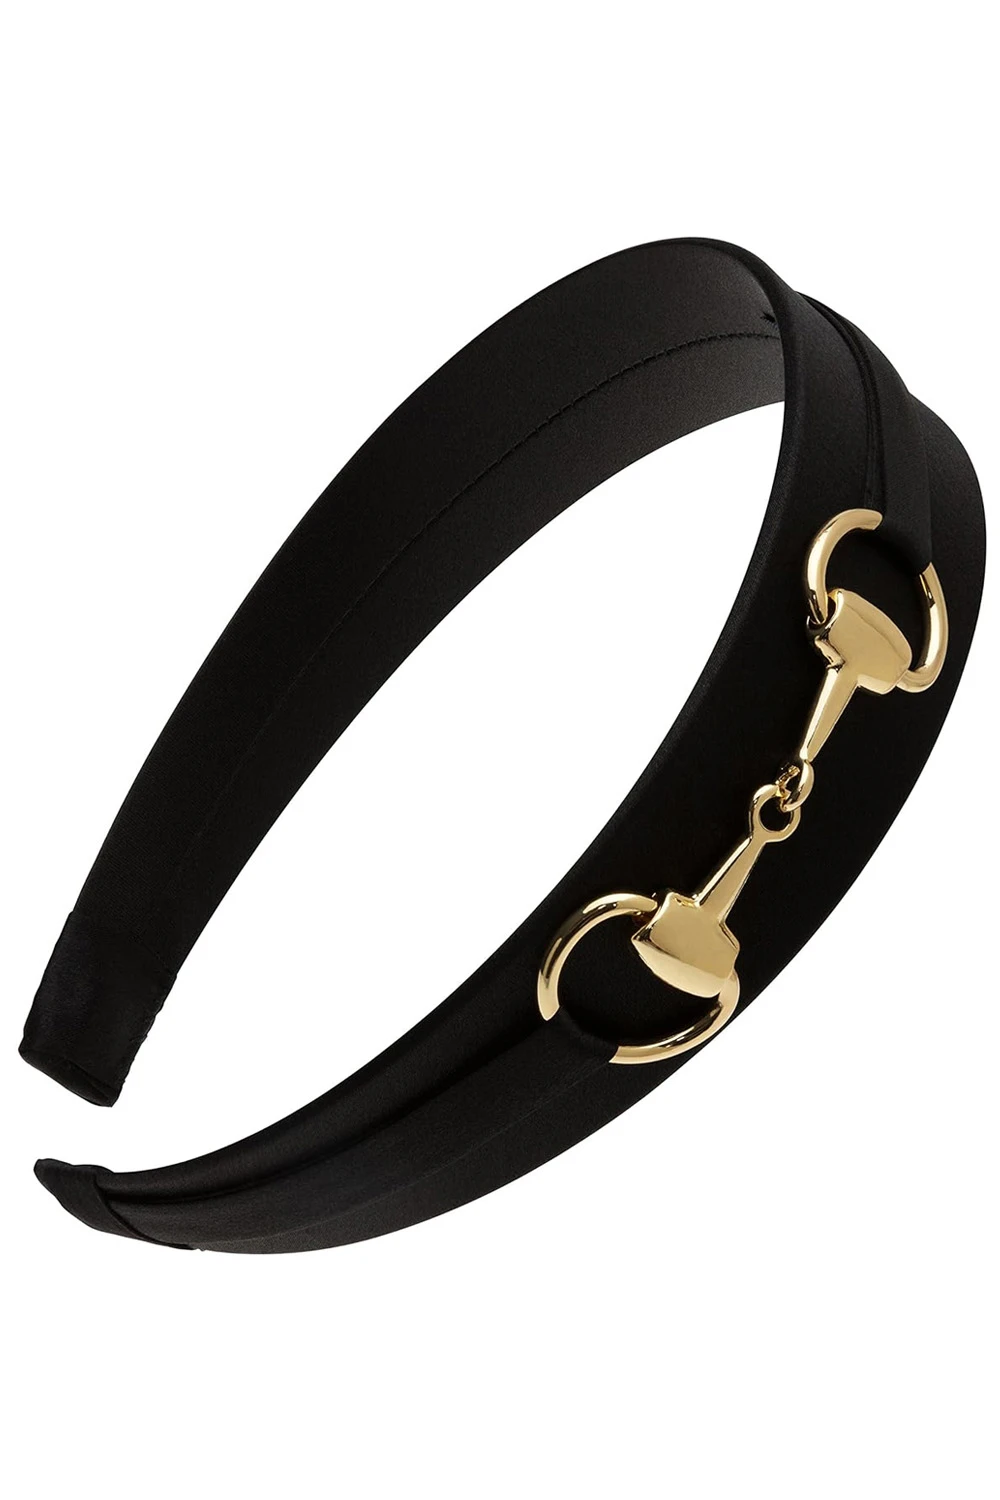 L Erickson gold buckle Bit headband